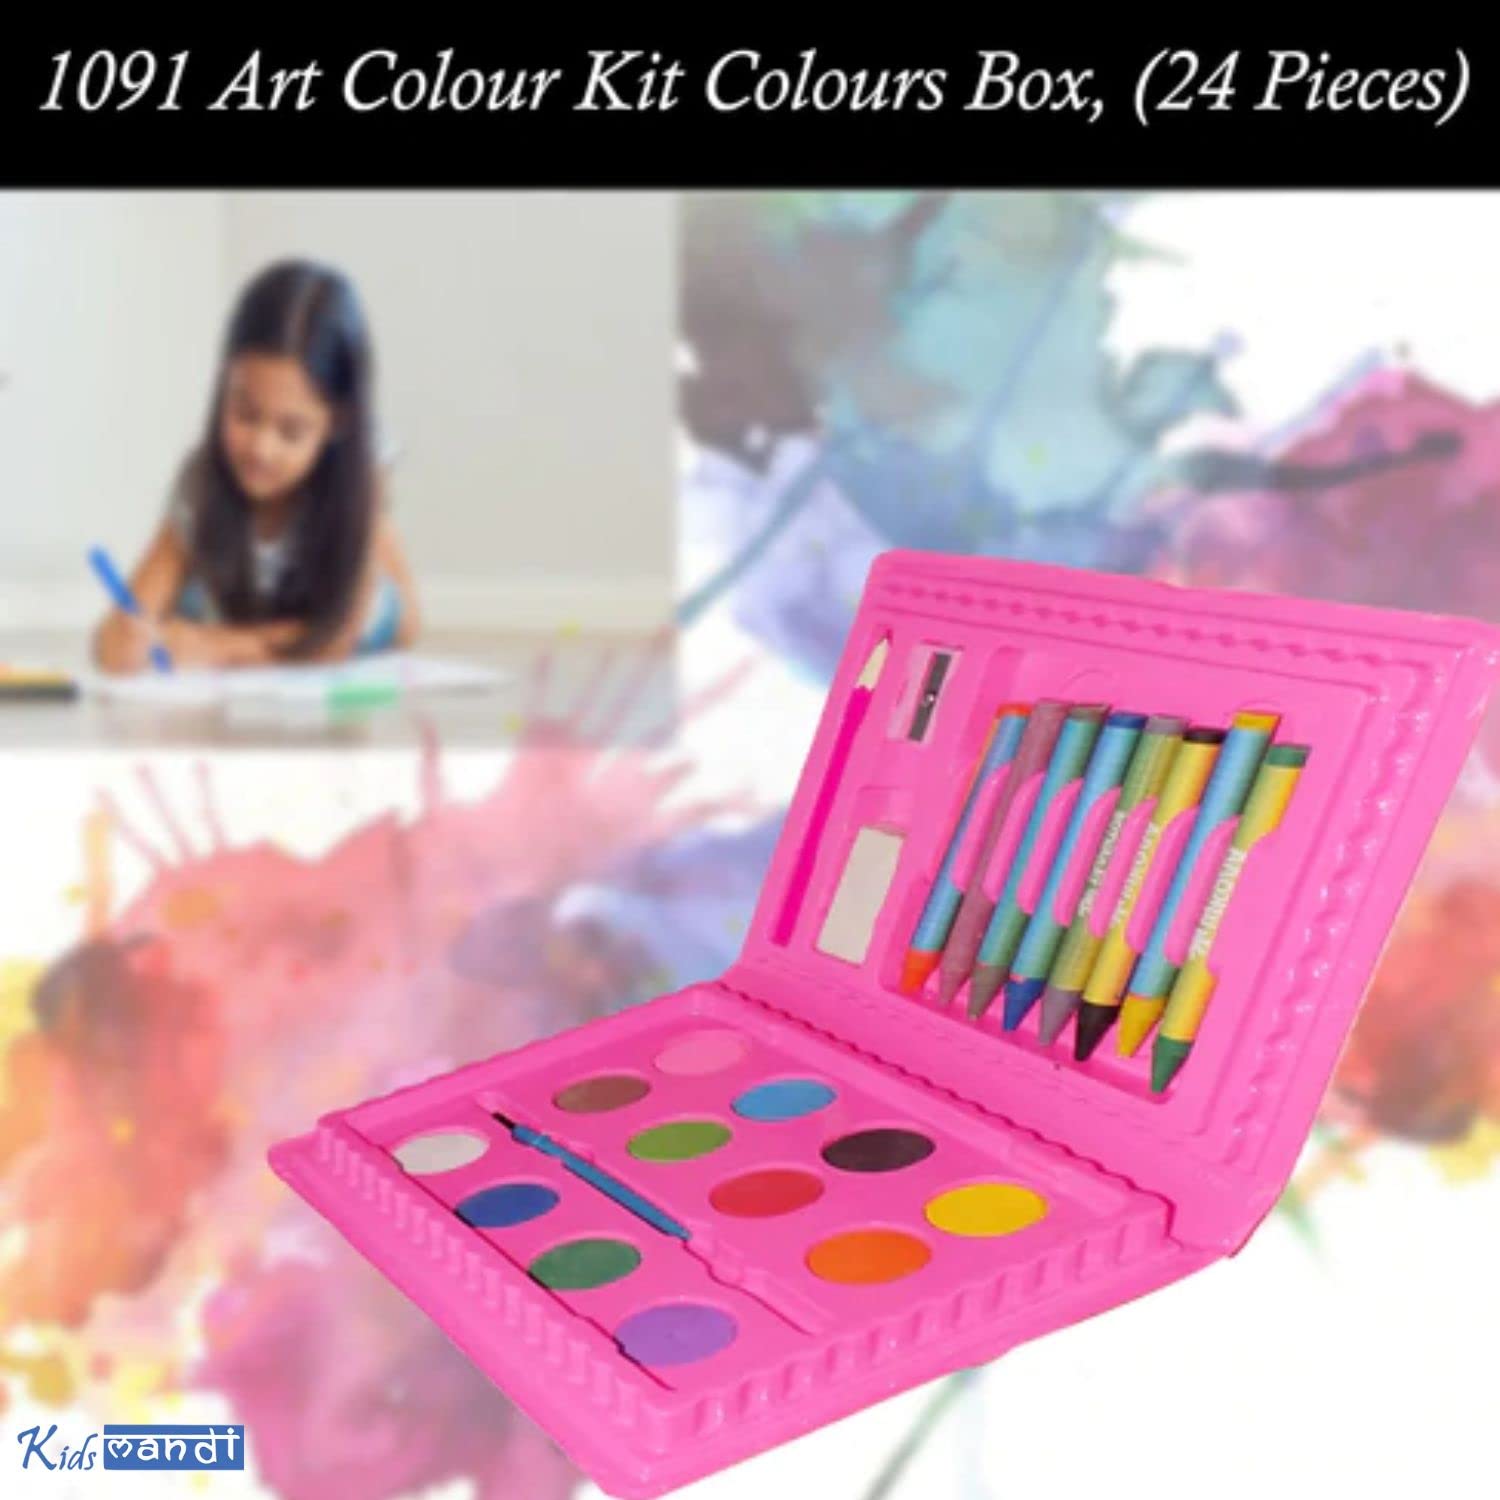 "Kids Mandi art supplies in portable box for drawing"